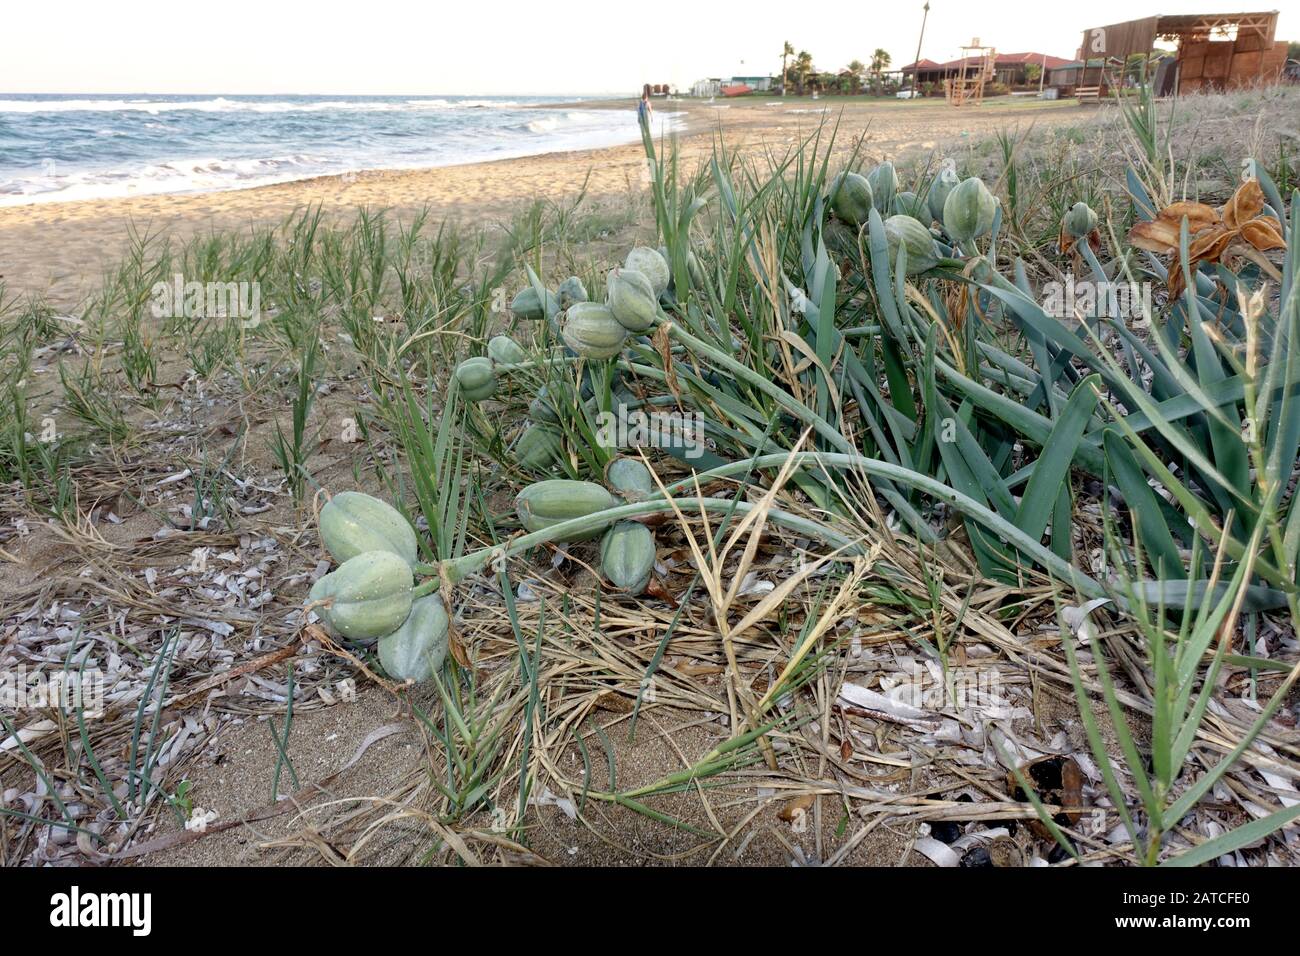 Dünen-Trichternarzisse (Pancratium maritimum), auch Strandlilie  - Samenstand, Famagusta, Türkische Republik Nordzypern Stock Photo